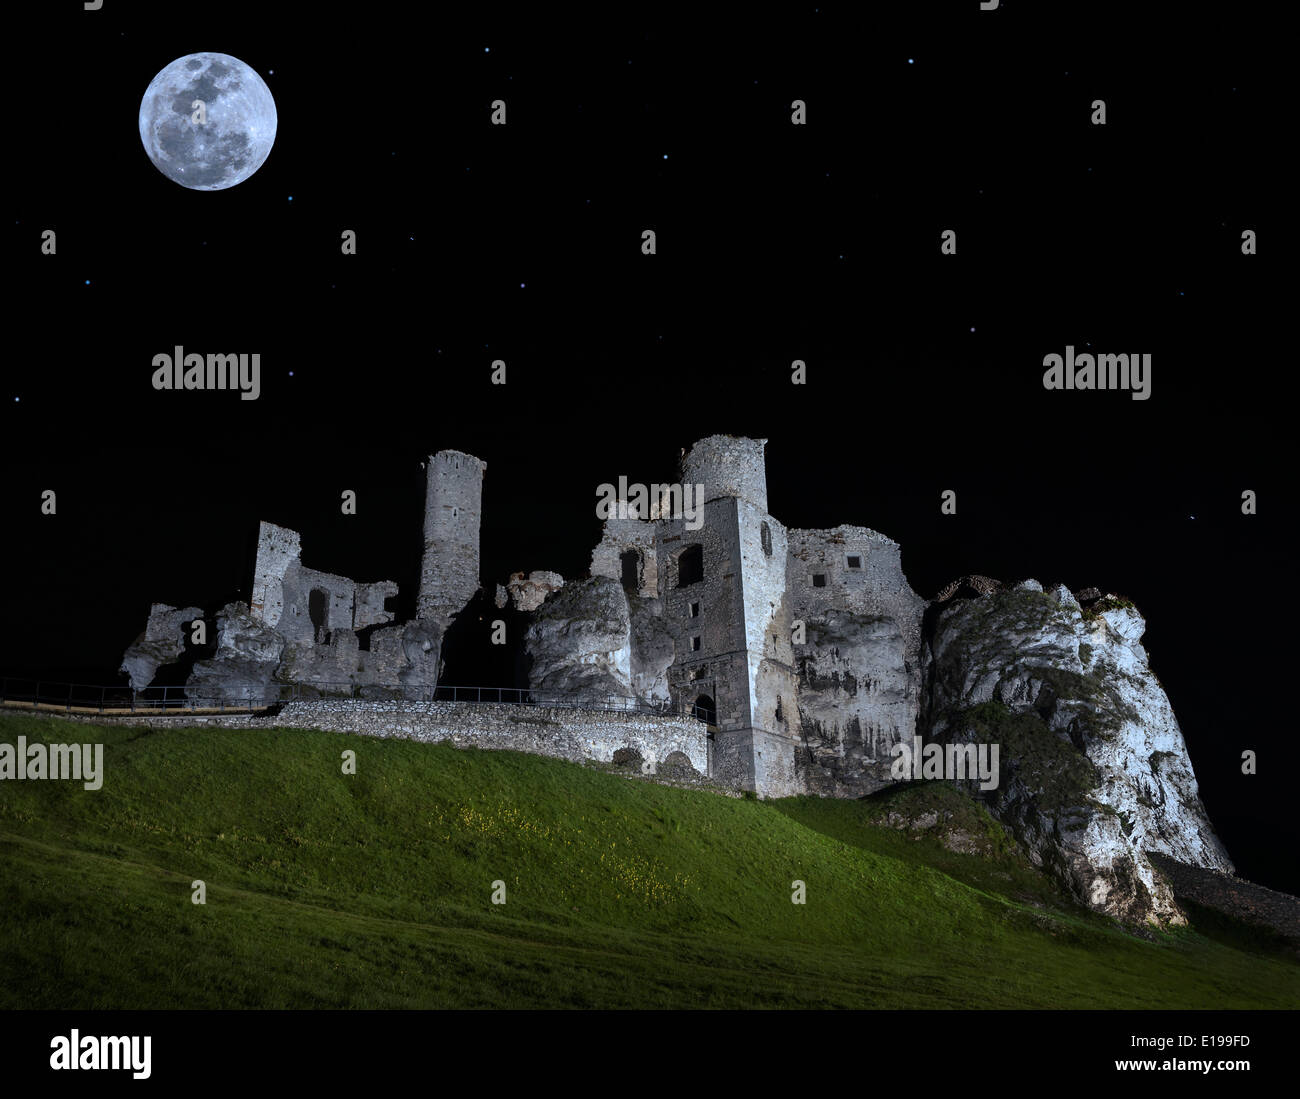 Full moon above ruins of castle, Ogrodzieniec, Poland. Stock Photo